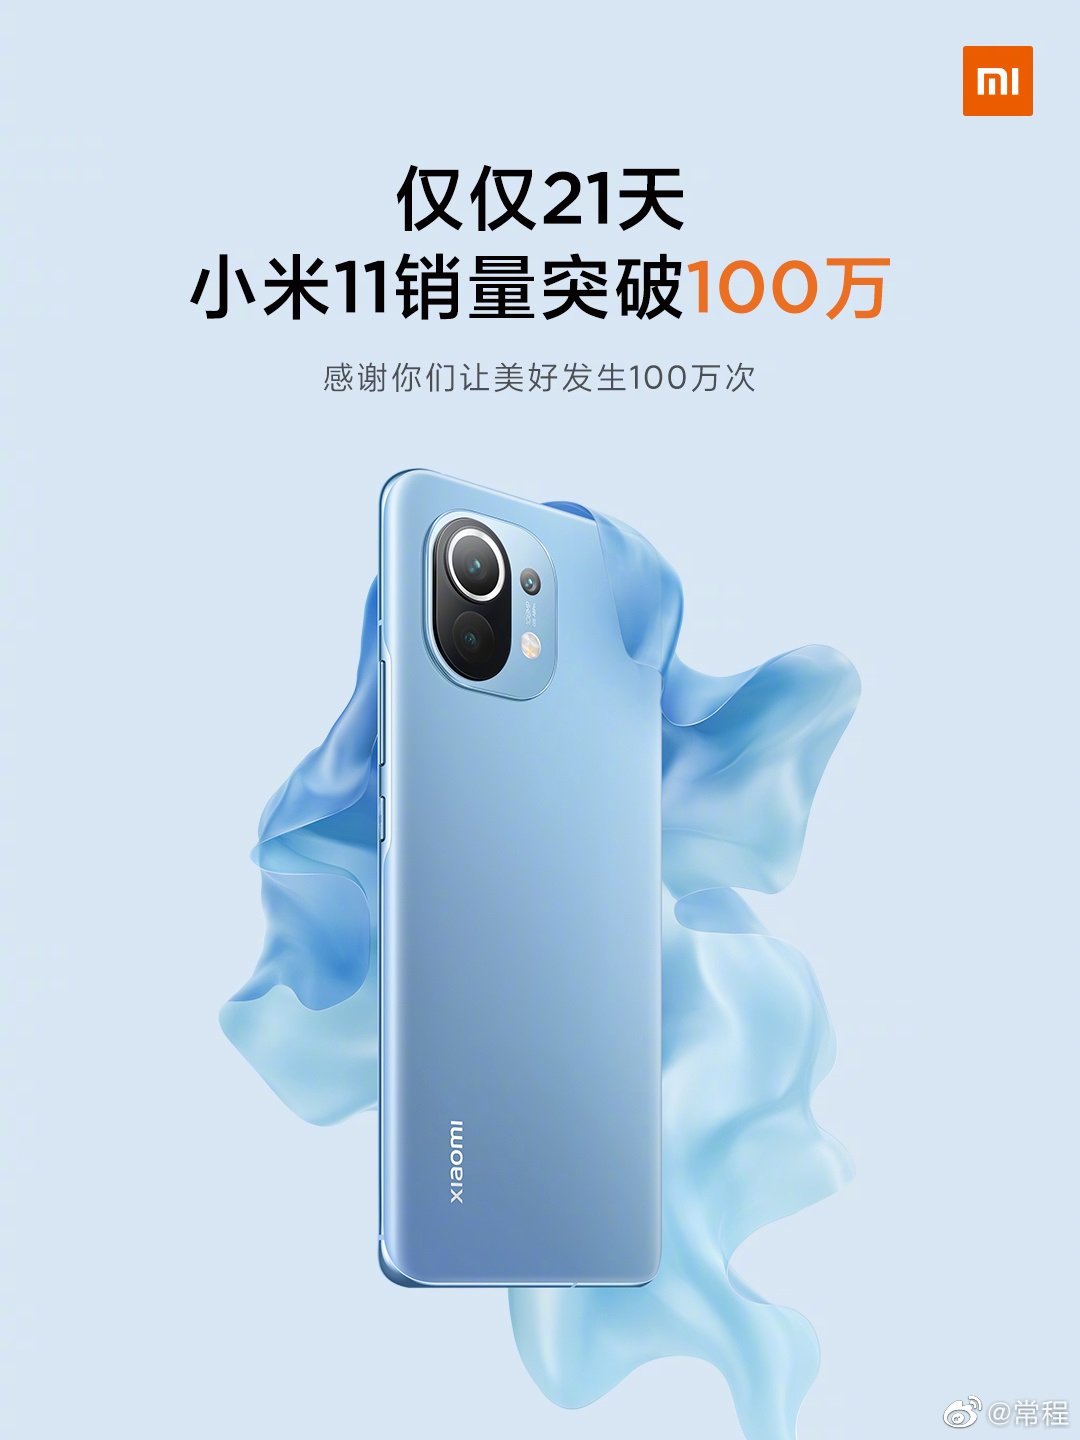 Xiaomi Mi 11 miljoner enheter sålda